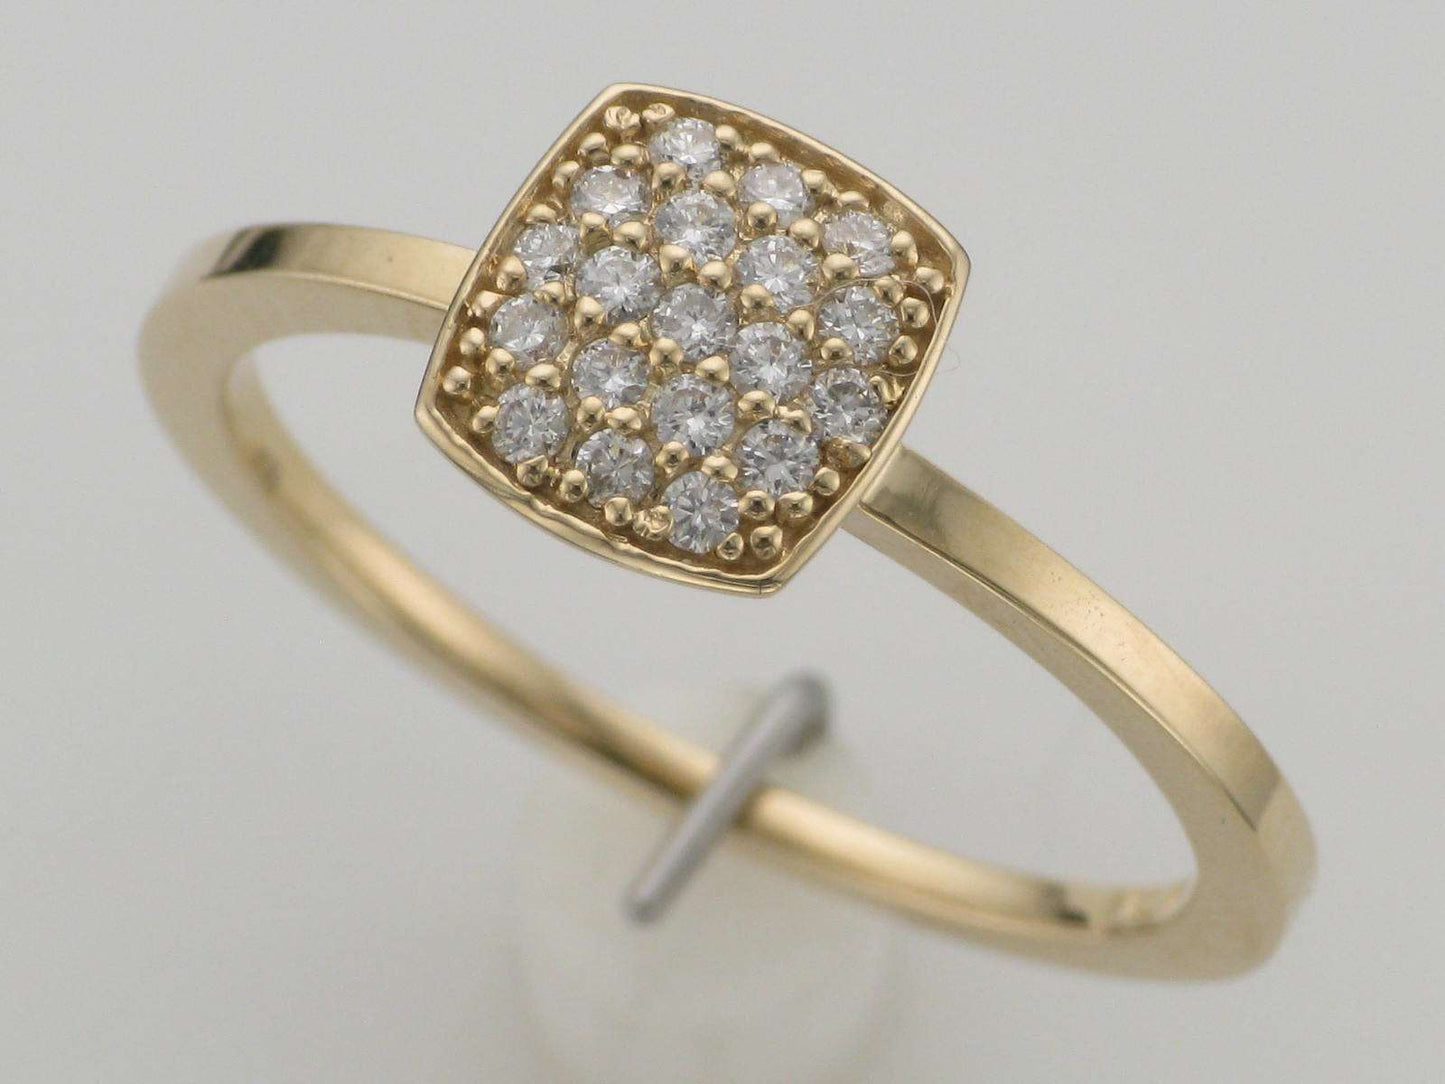 Diamond Fashion Rings - Women' - Diamond Fashion Rings - Women's